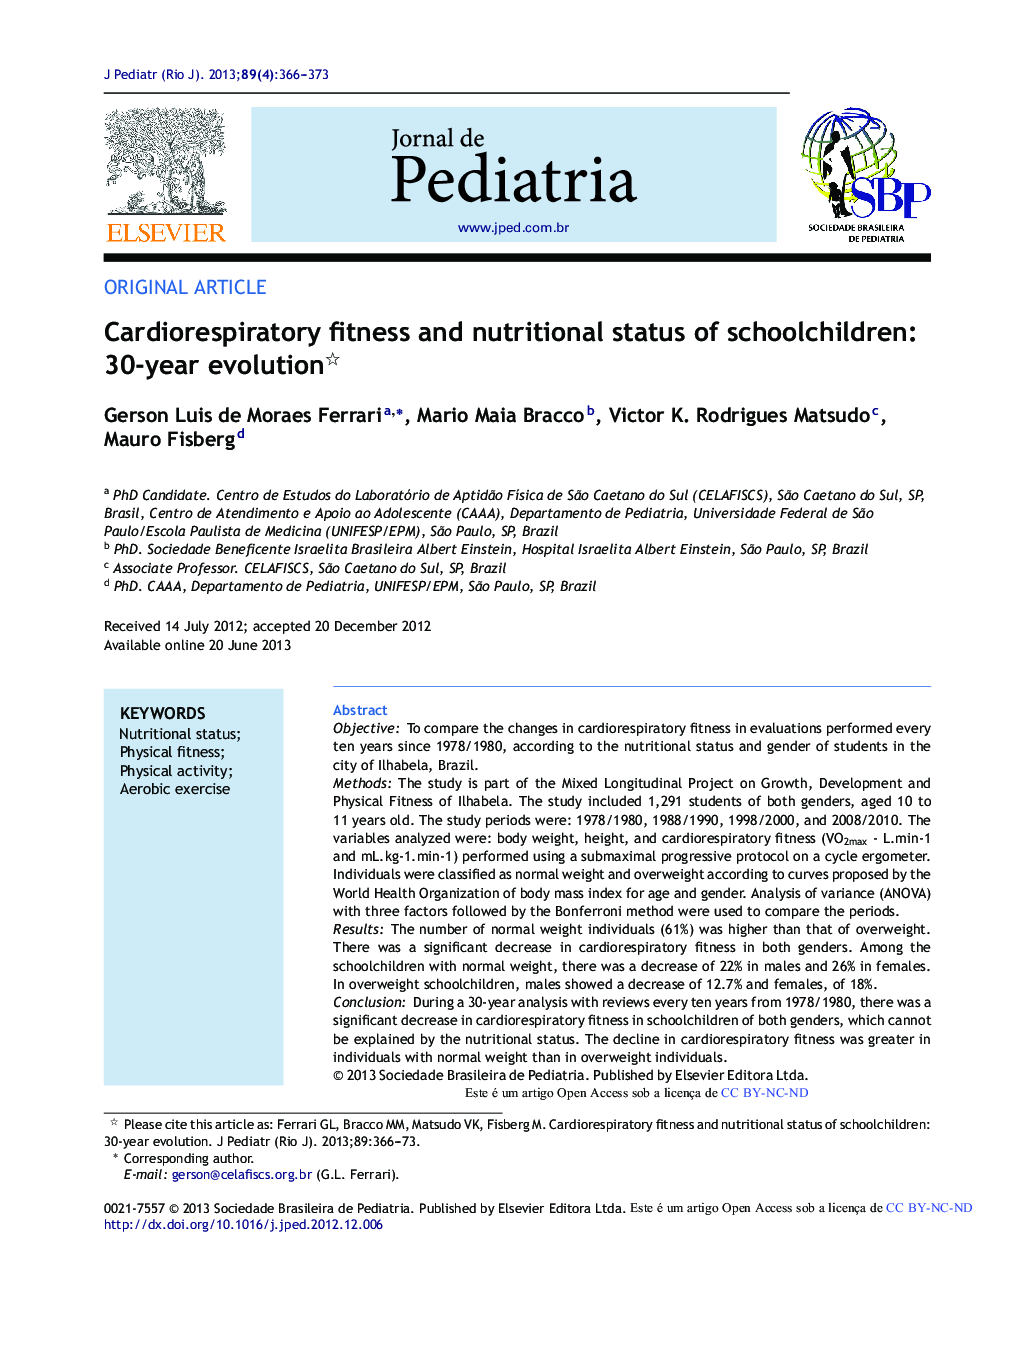 Cardiorespiratory fitness and nutritional status of schoolchildren: 30-year evolution 